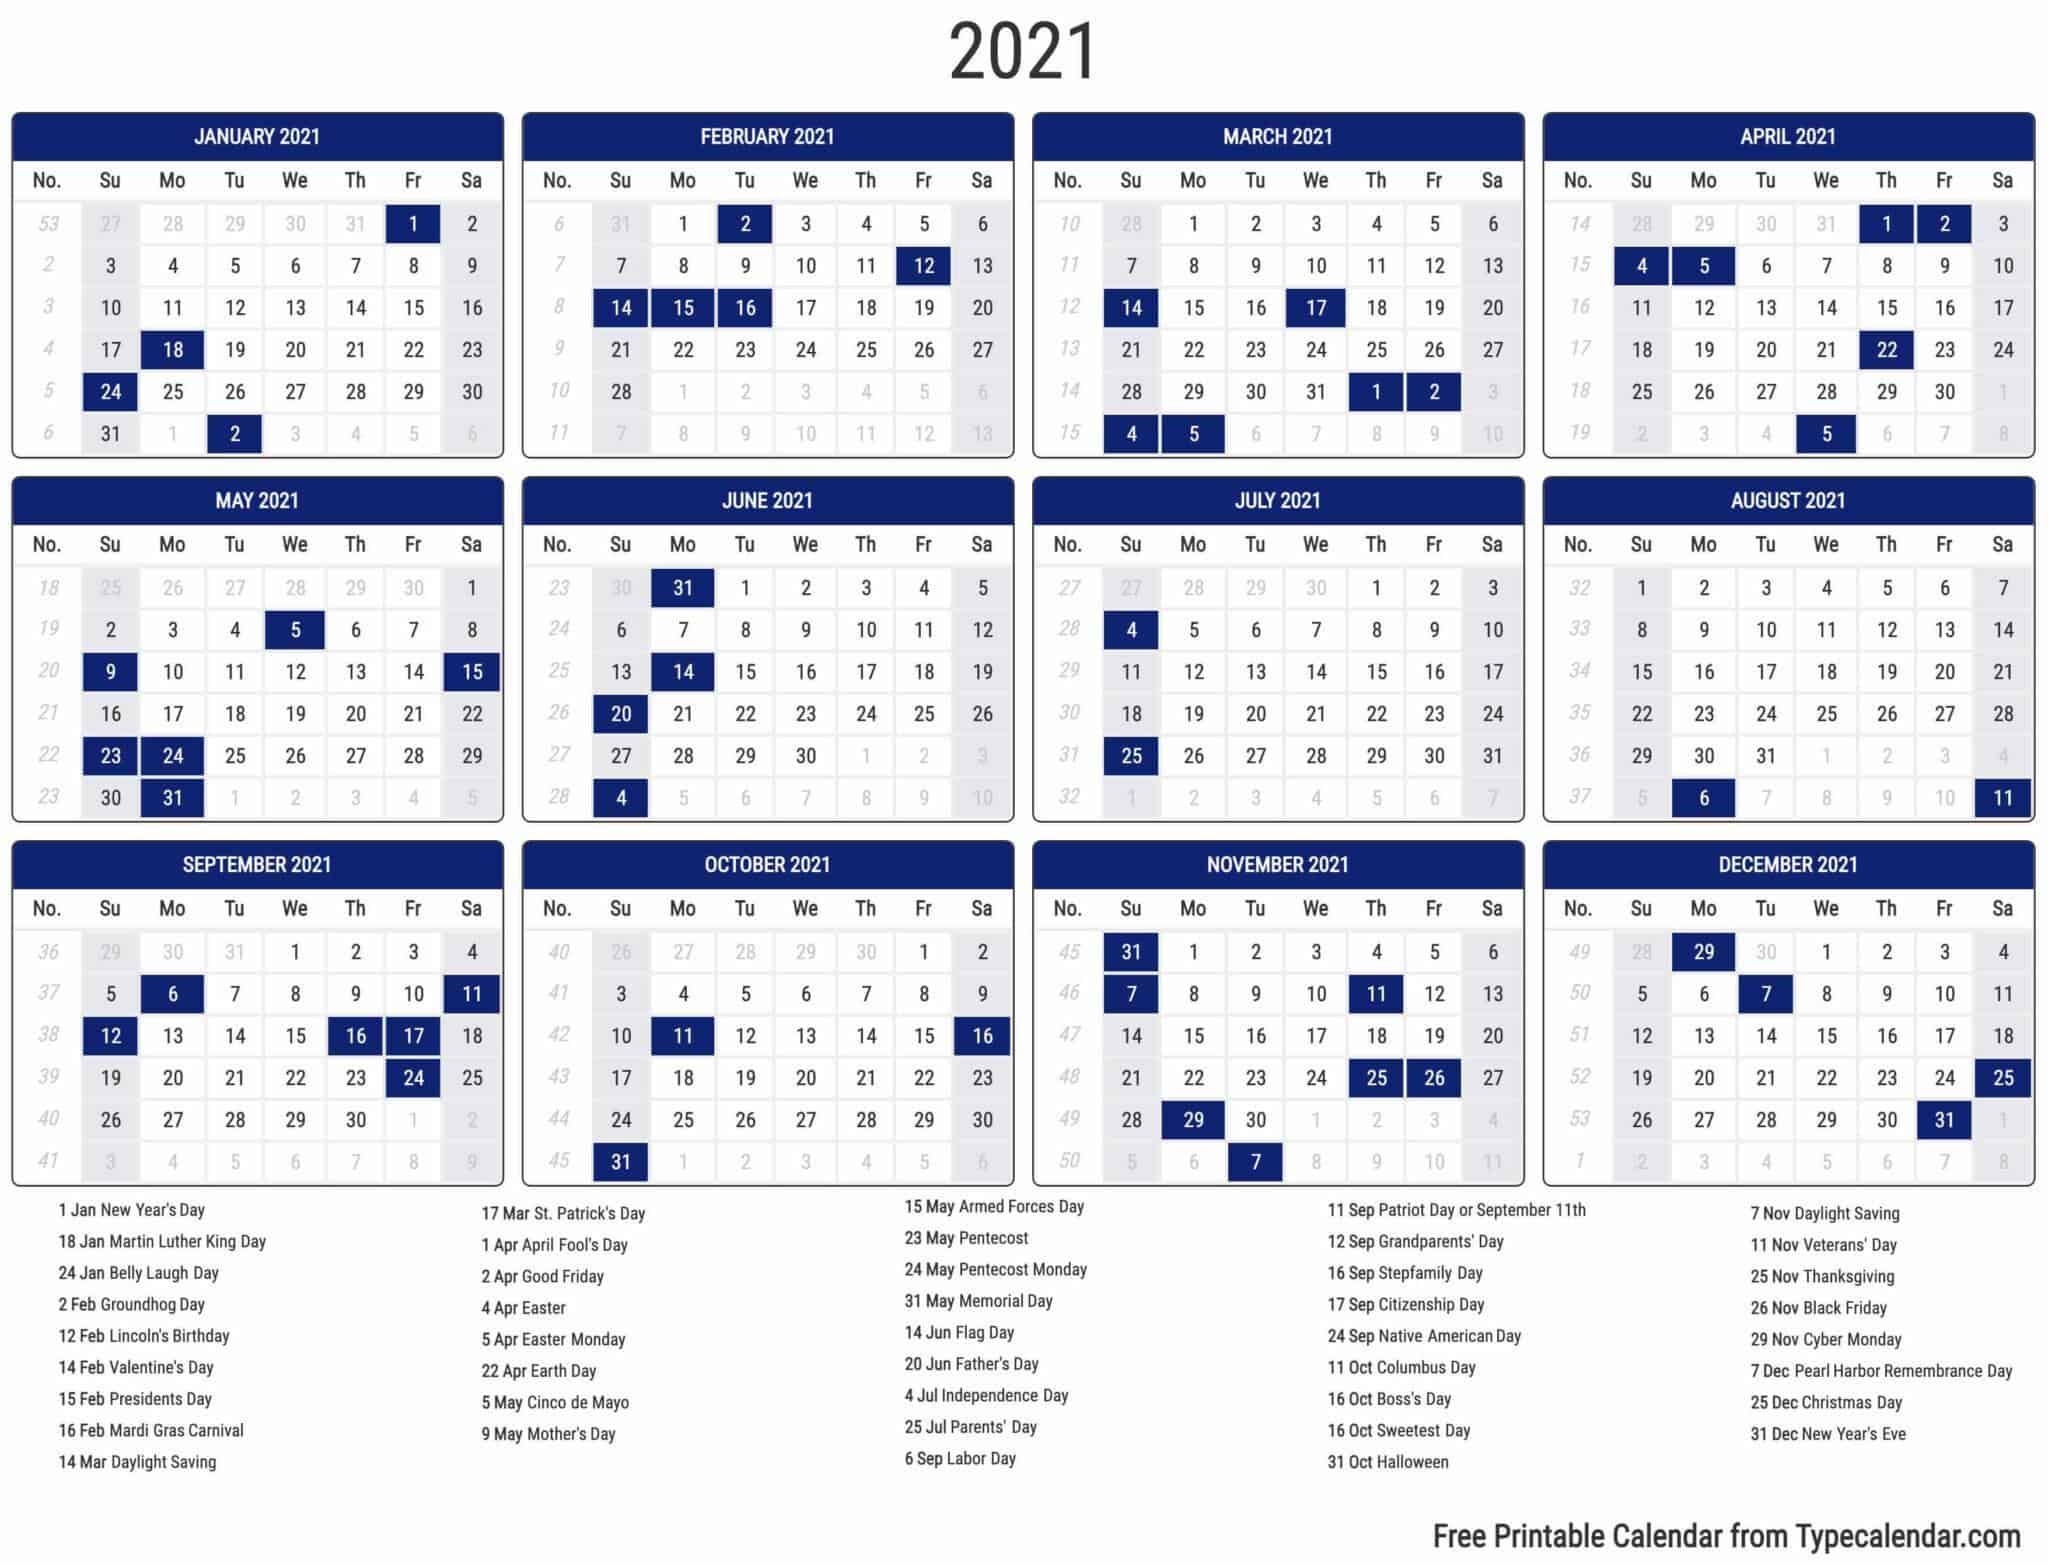 free printable year 2021 calendar type calendar